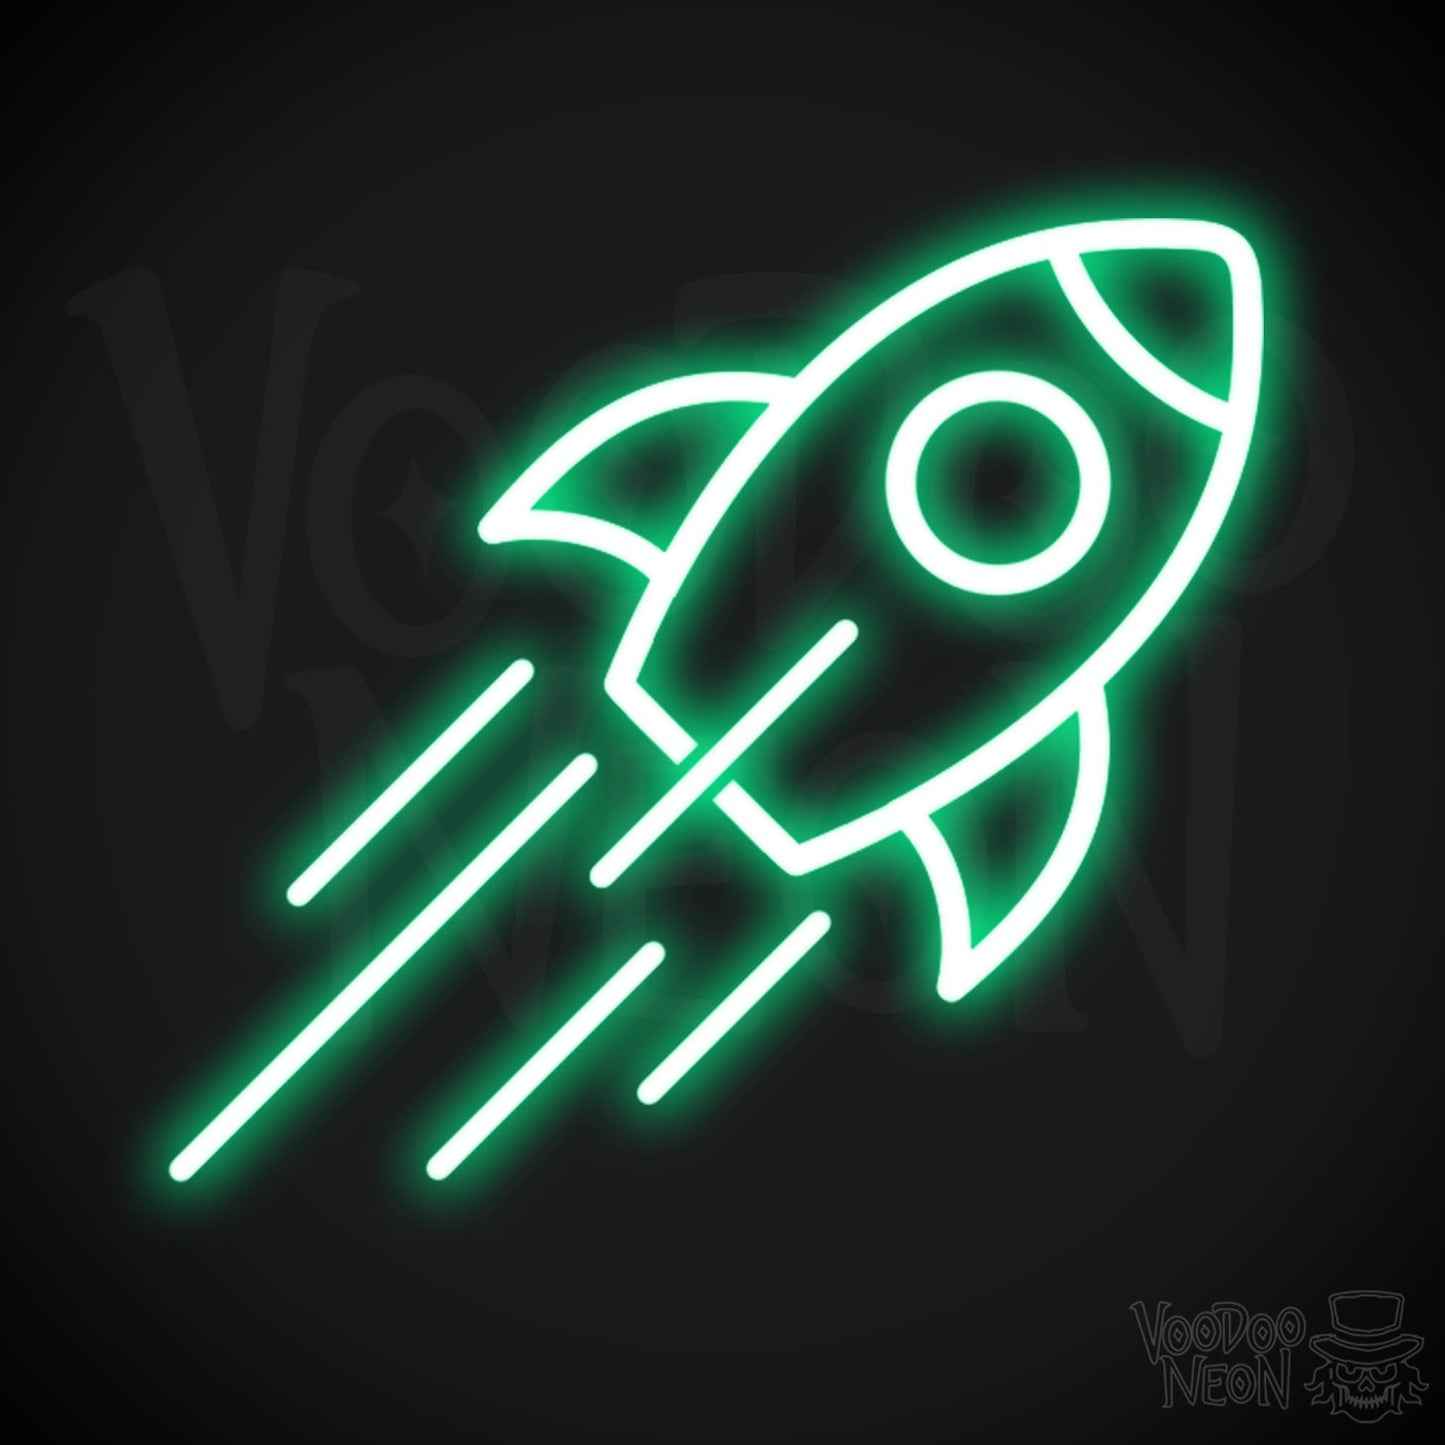 Neon Rocket - Rocket Neon Sign - Rocket Ship Neon Wall Art - Color Green